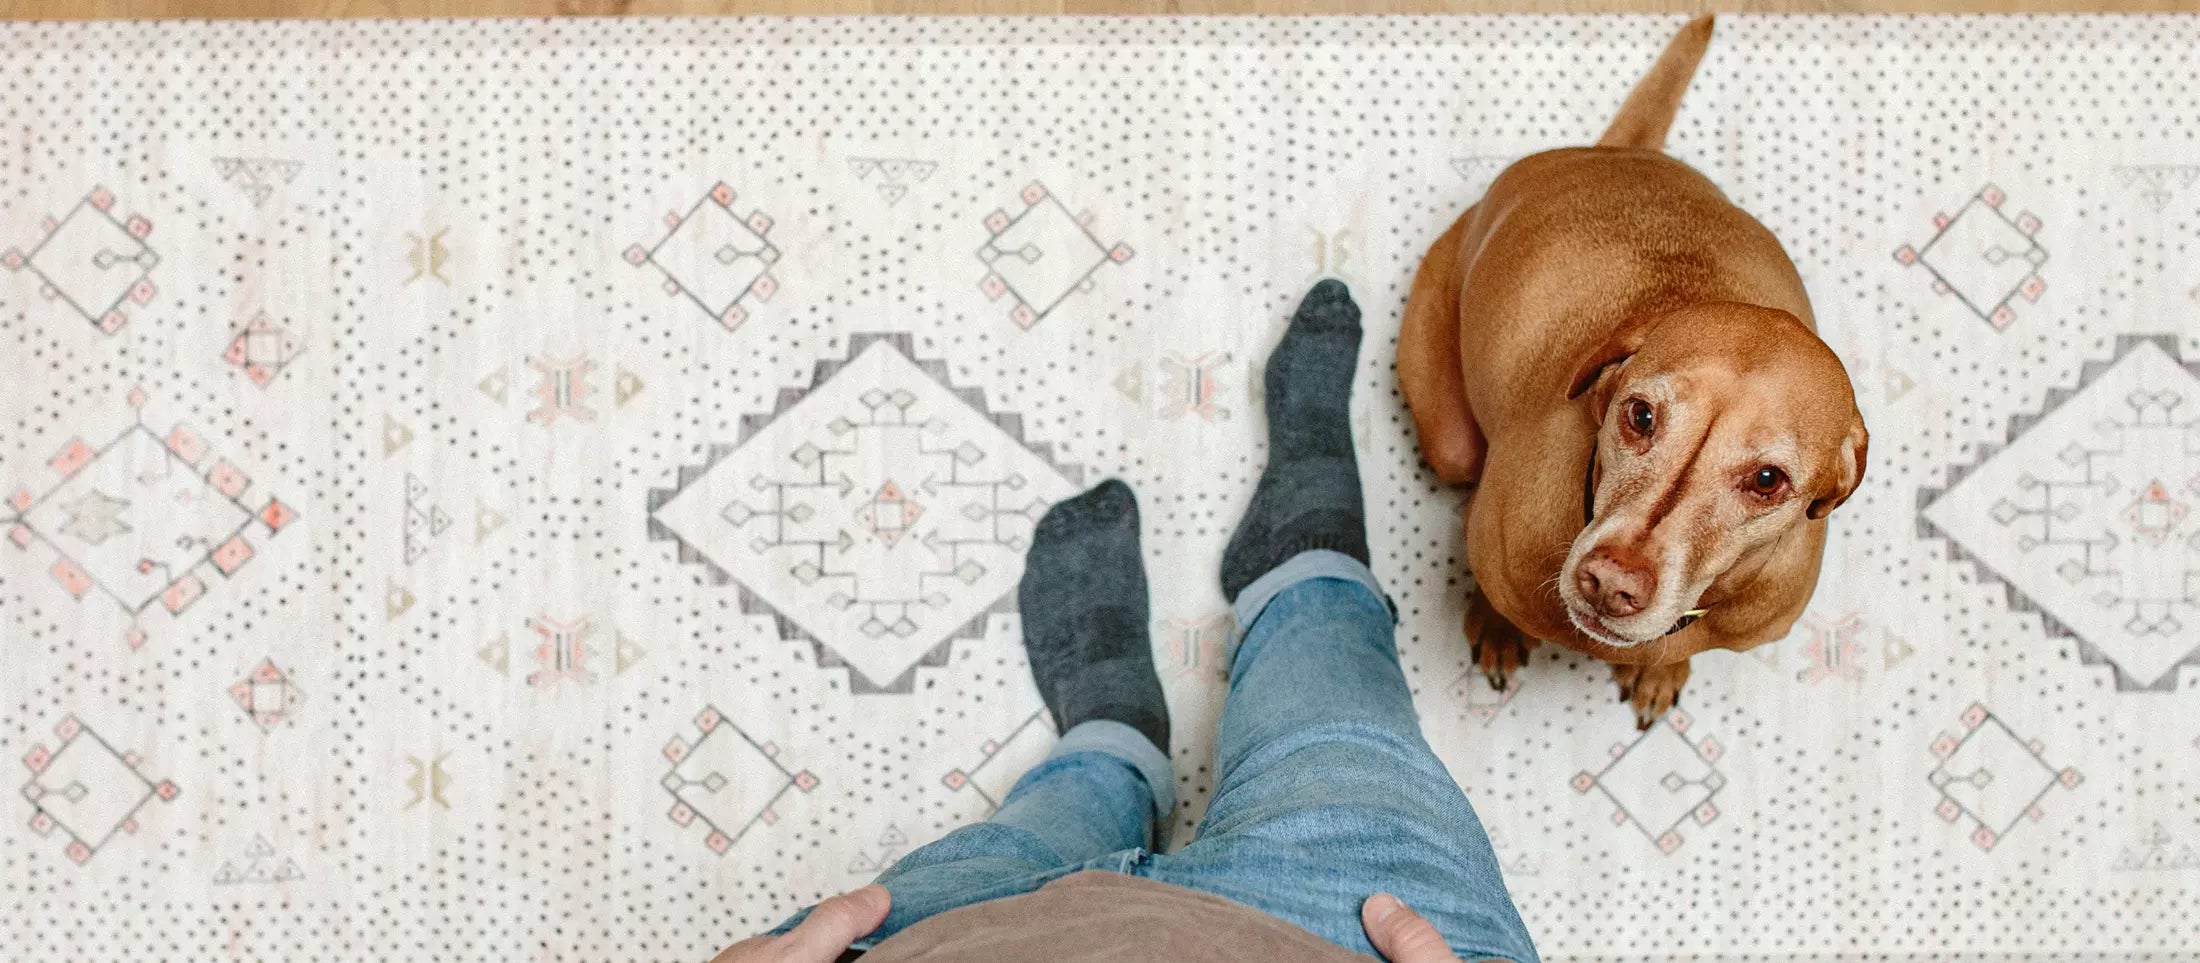 Ula Oat Neutral boho kitchen mat with man and dog